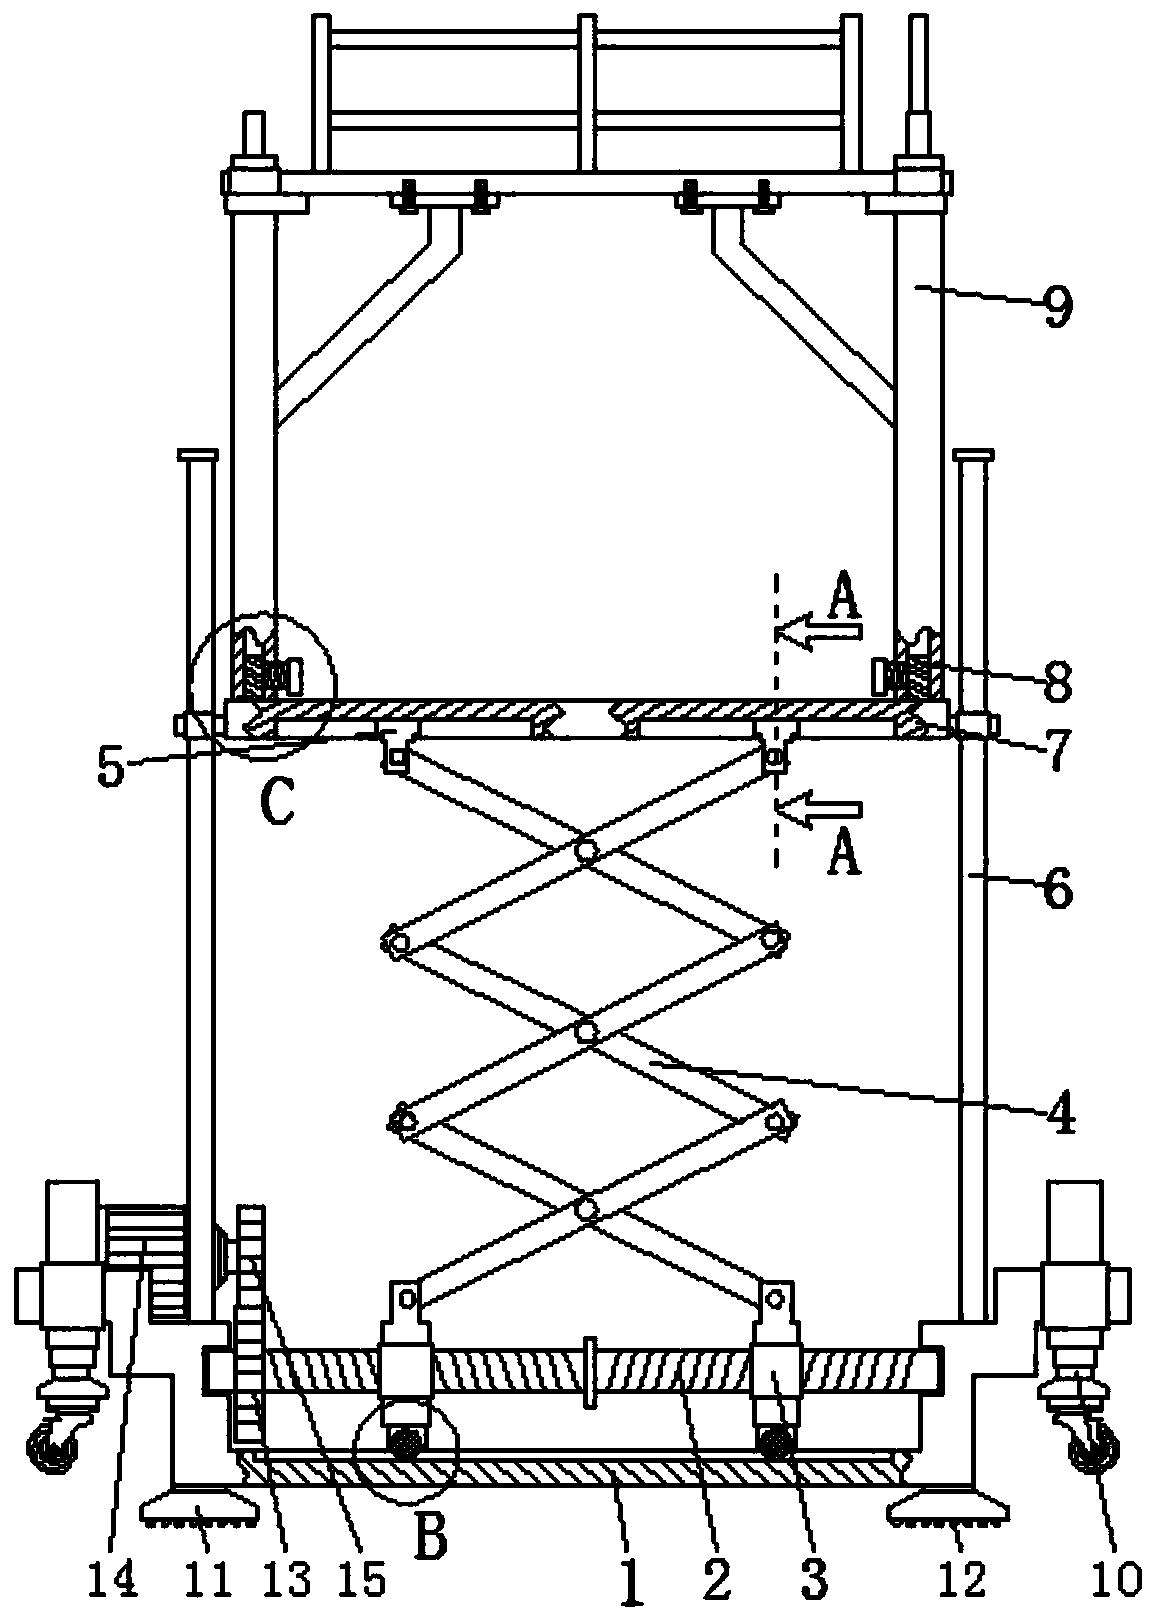 Building construction bearing frame